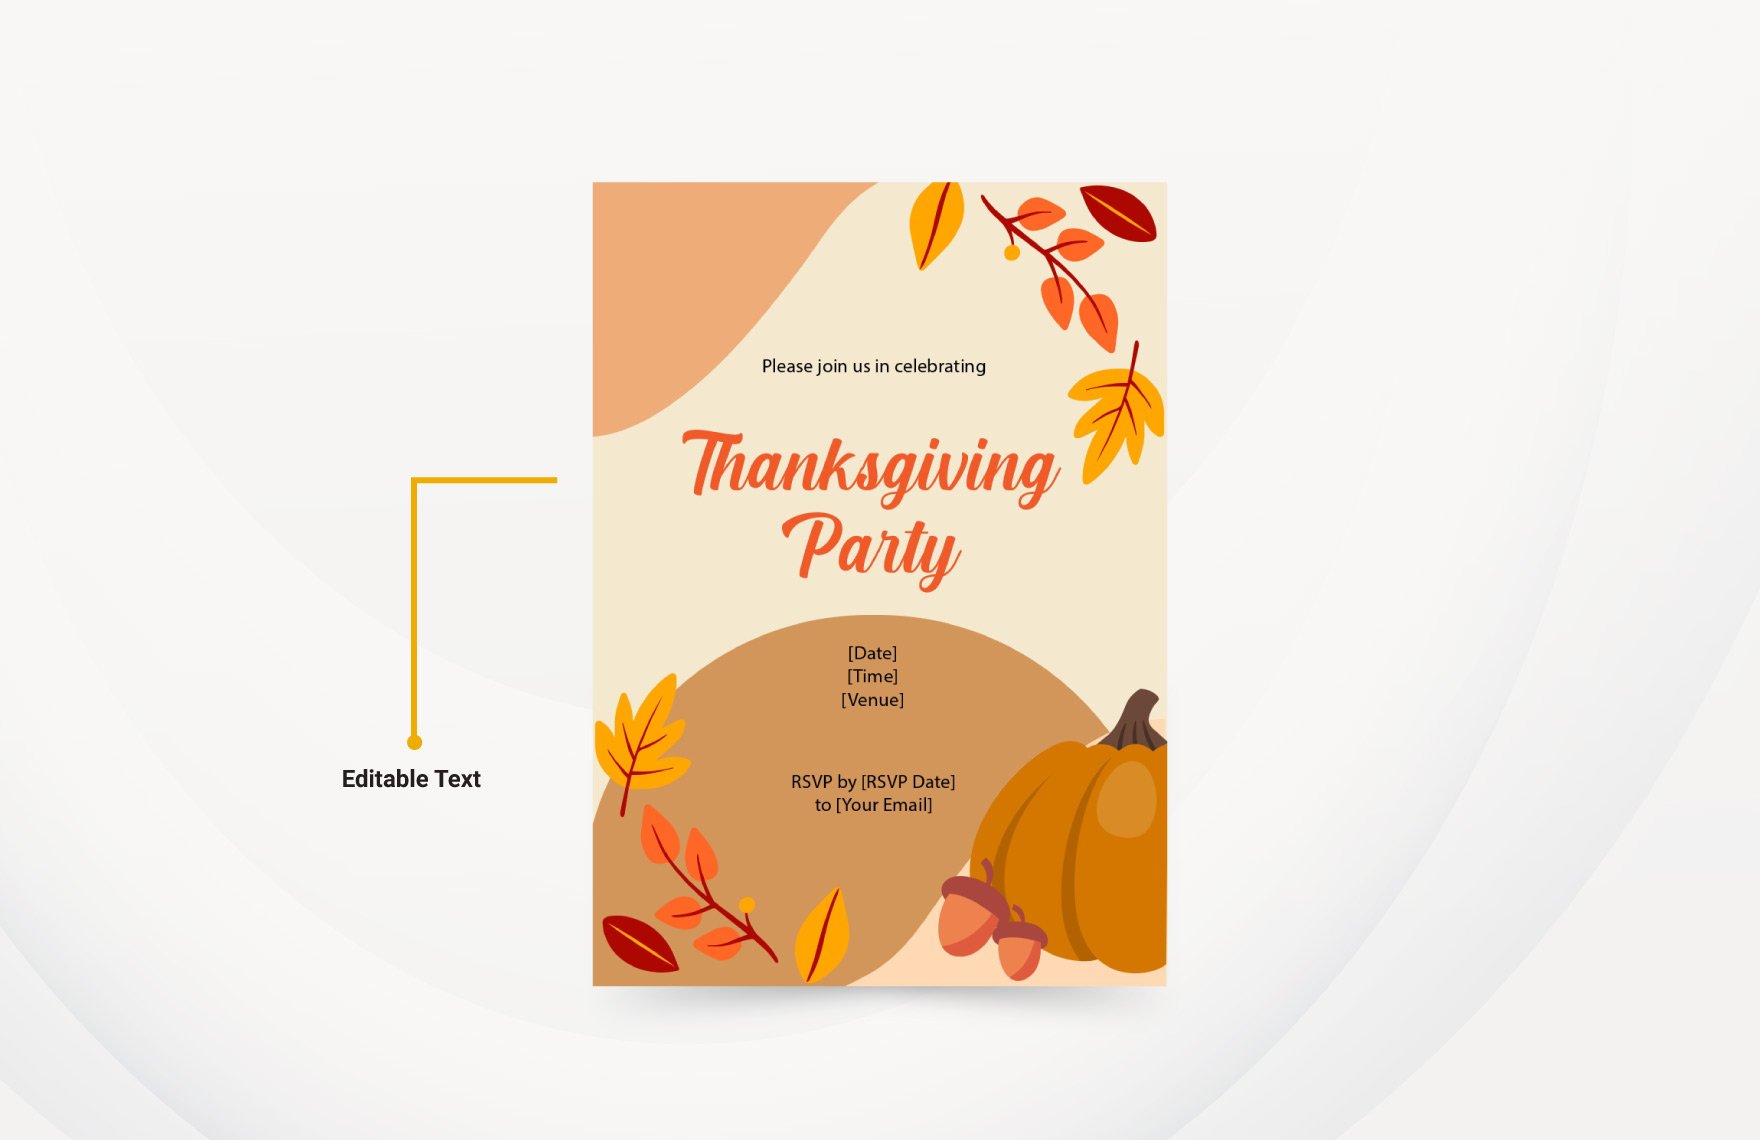 Thanksgiving Day Invitation 2023